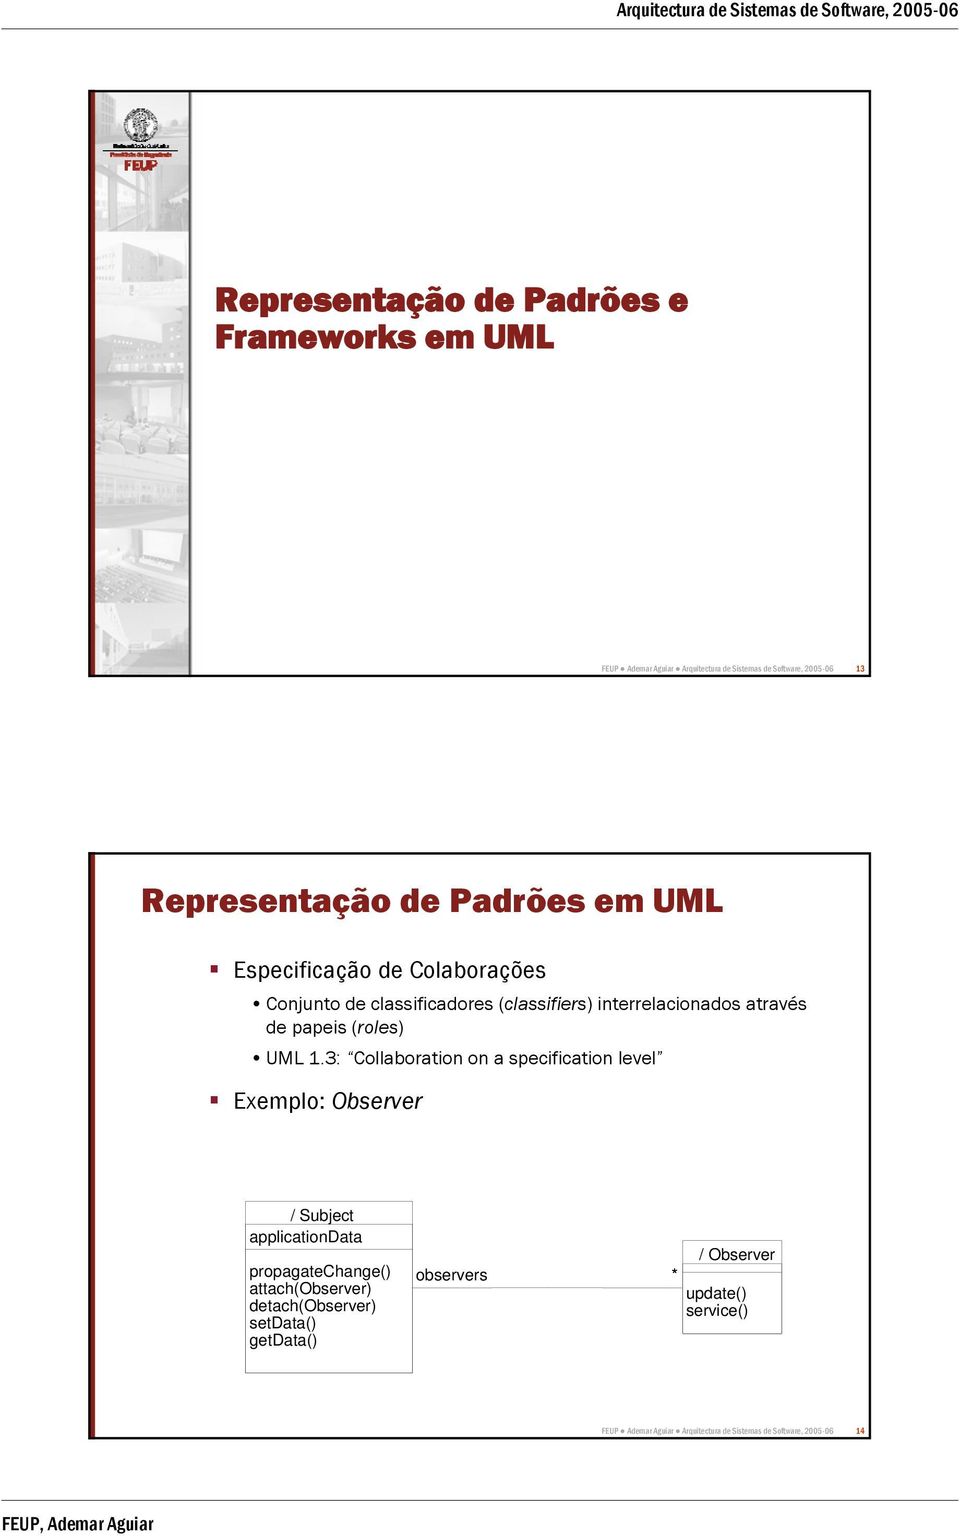 UML 1.